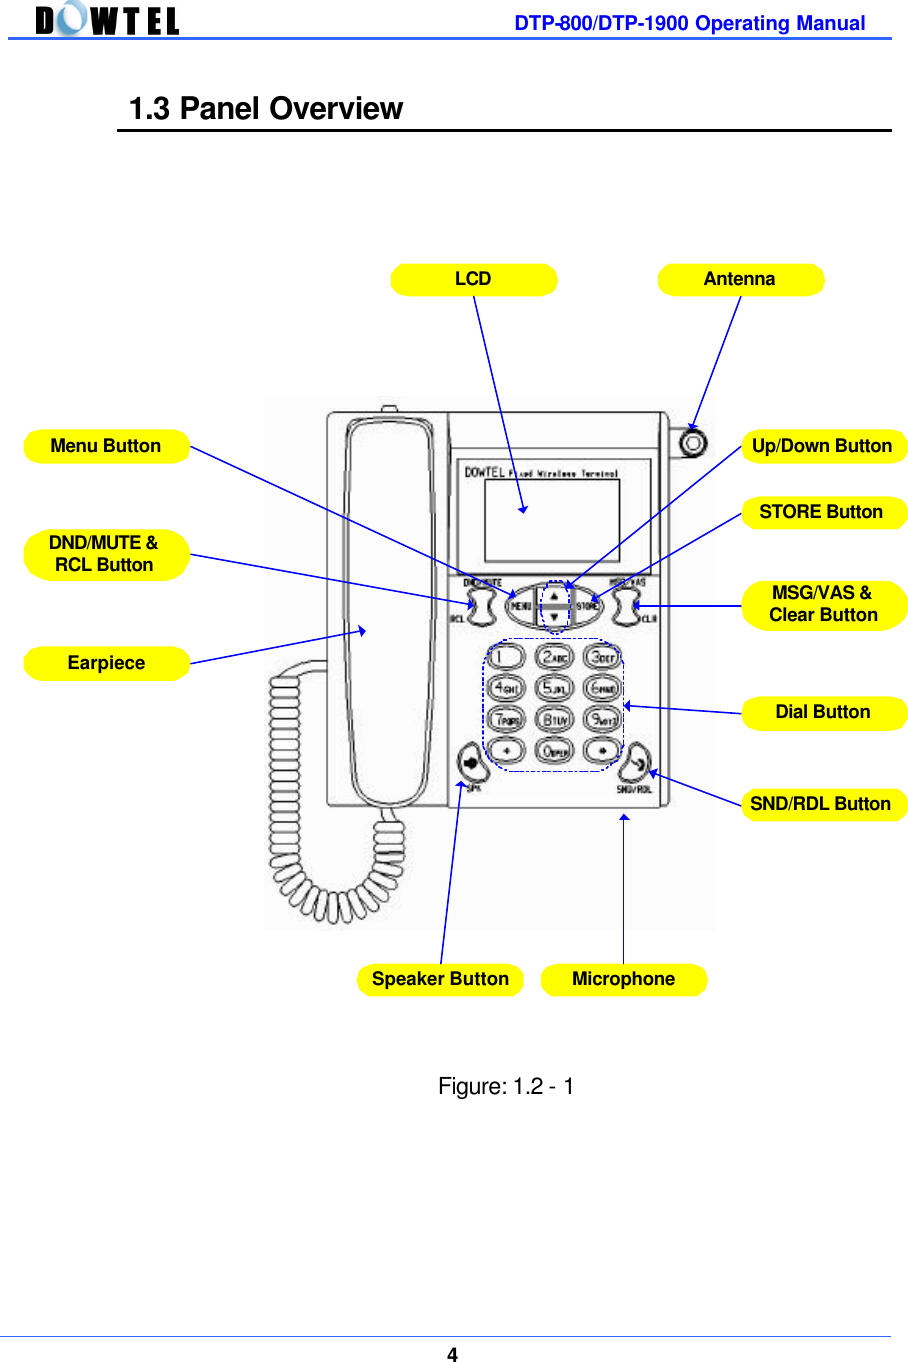         DTP-800/DTP-1900 Operating Manual    4  1.3 Panel Overview       LCD AntennaUp/Down ButtonSTORE ButtonMSG/VAS &amp;Clear ButtonDial ButtonSND/RDL ButtonMicrophoneSpeaker ButtonEarpieceDND/MUTE &amp;RCL ButtonMenu Button   Figure: 1.2 - 1        